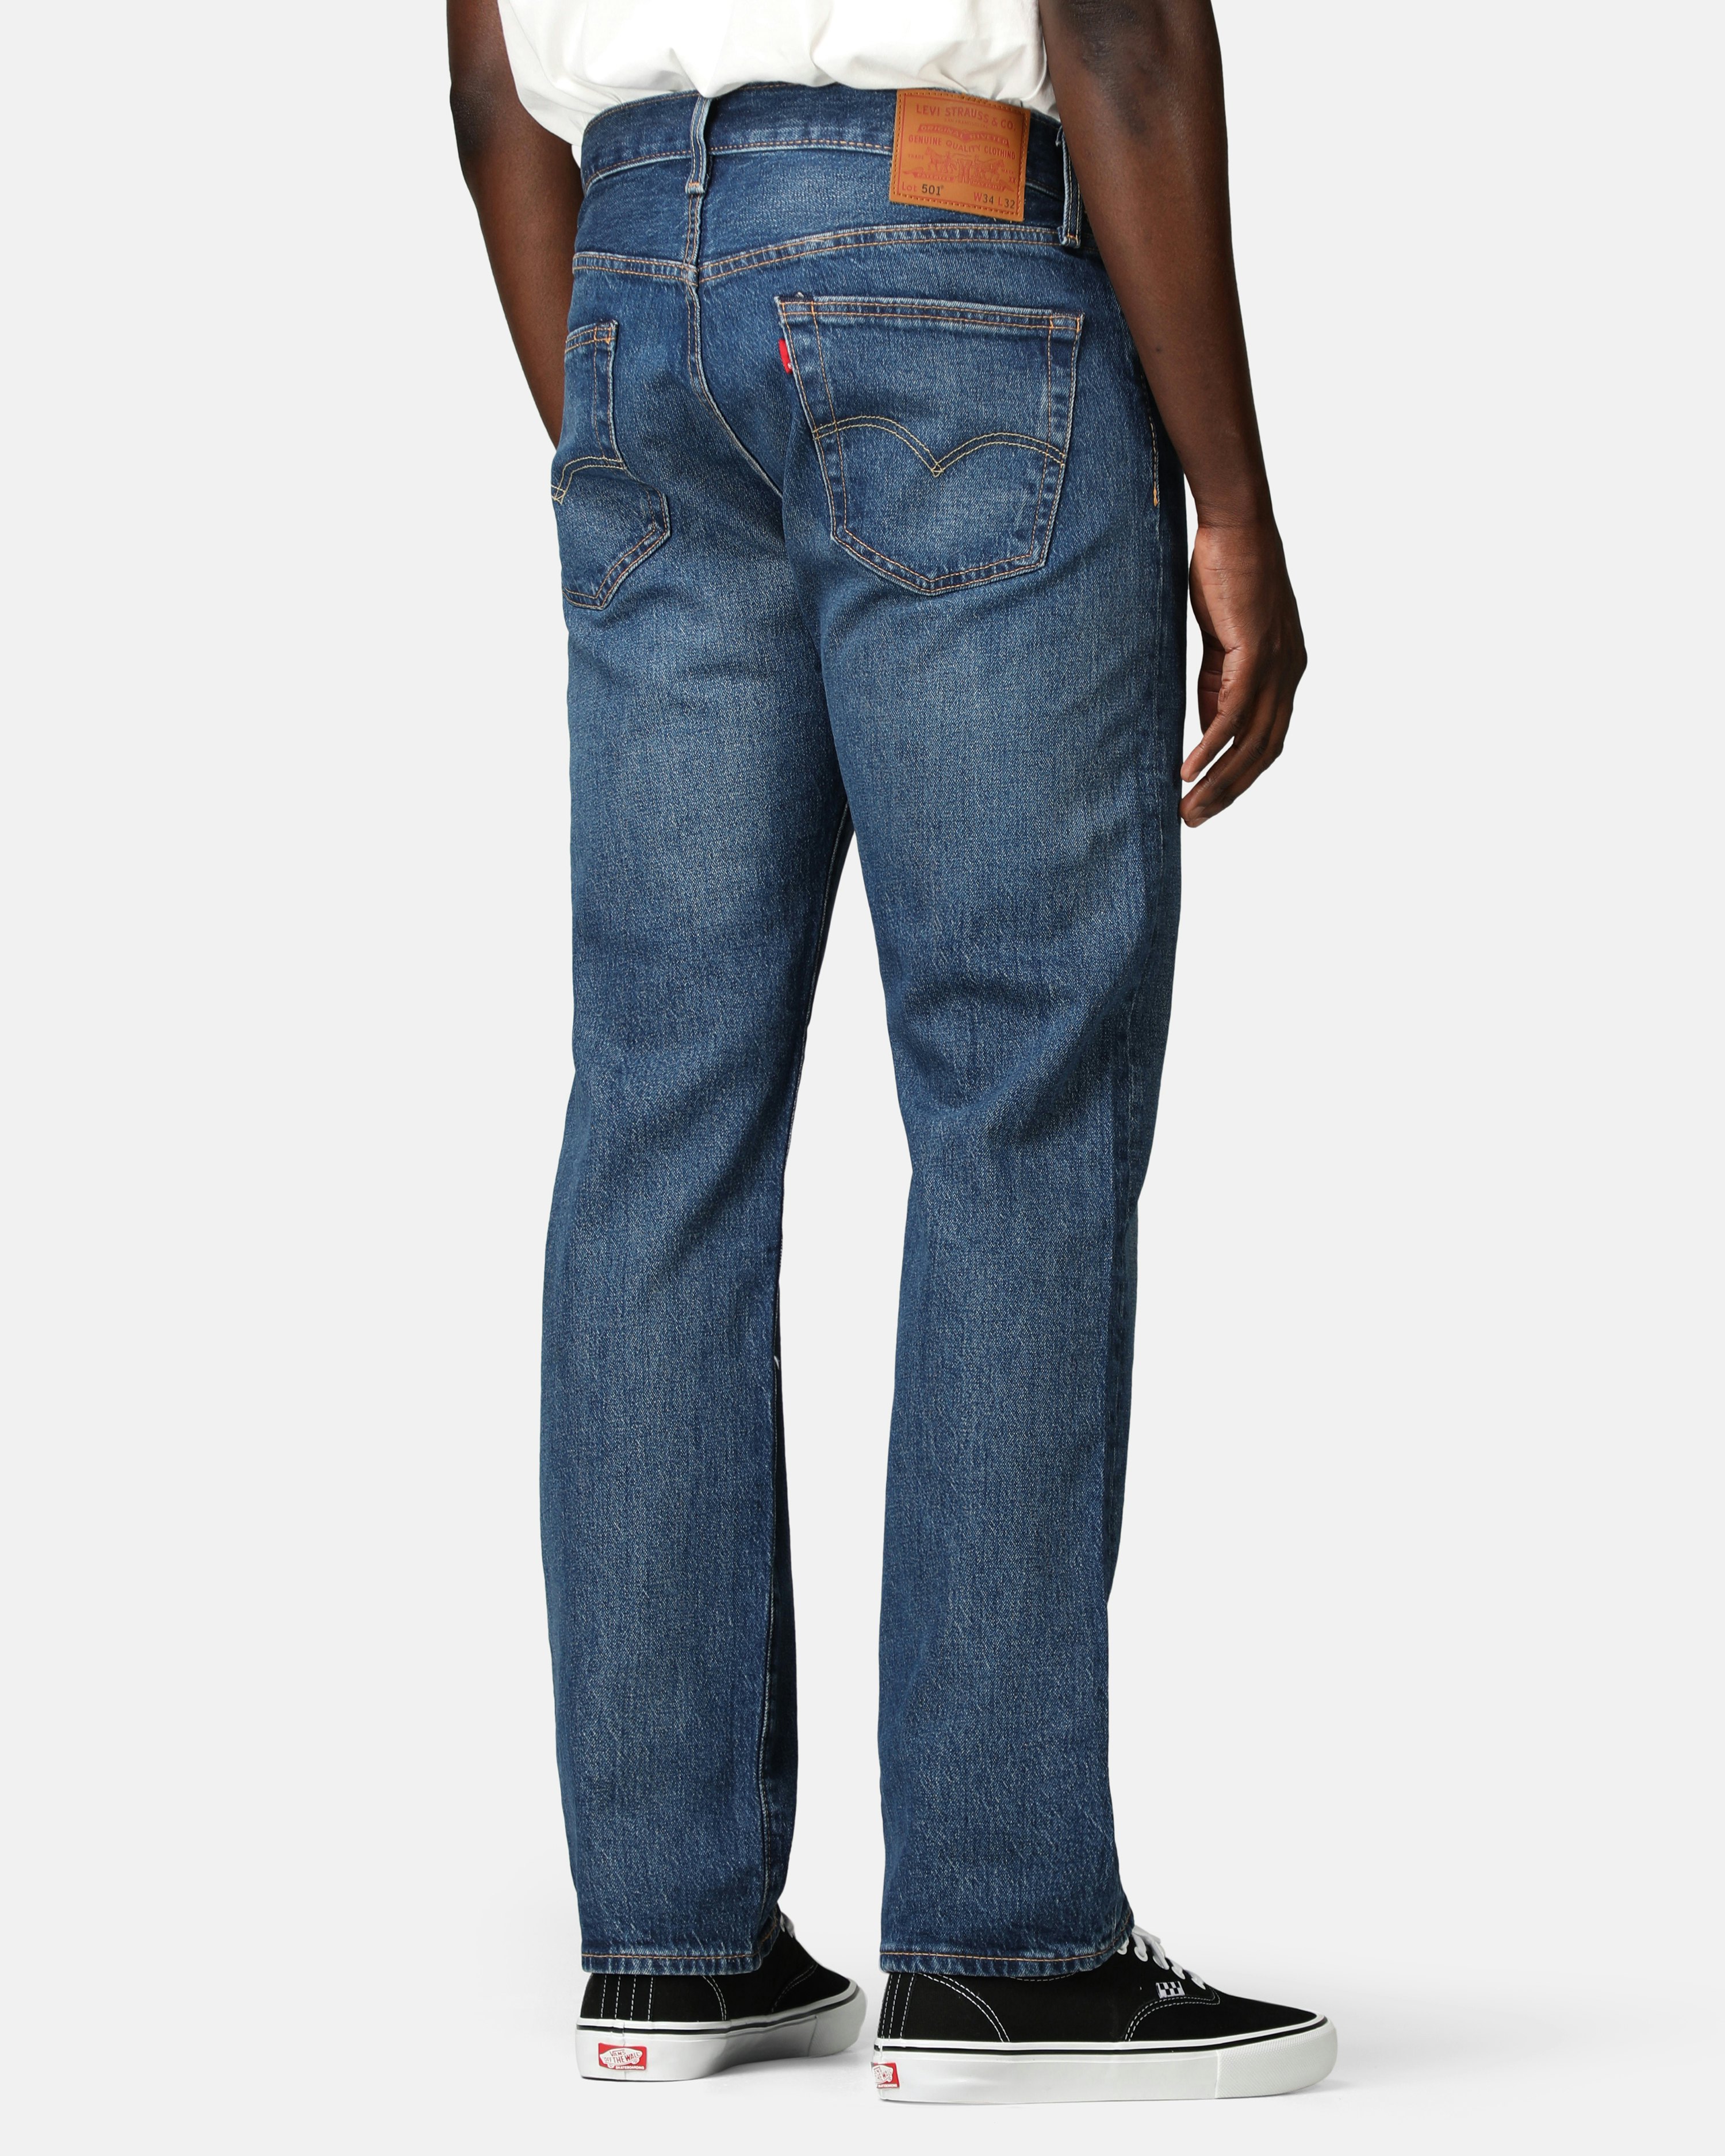 Levis Jeans - 501 Original Silver | Men | Junkyard